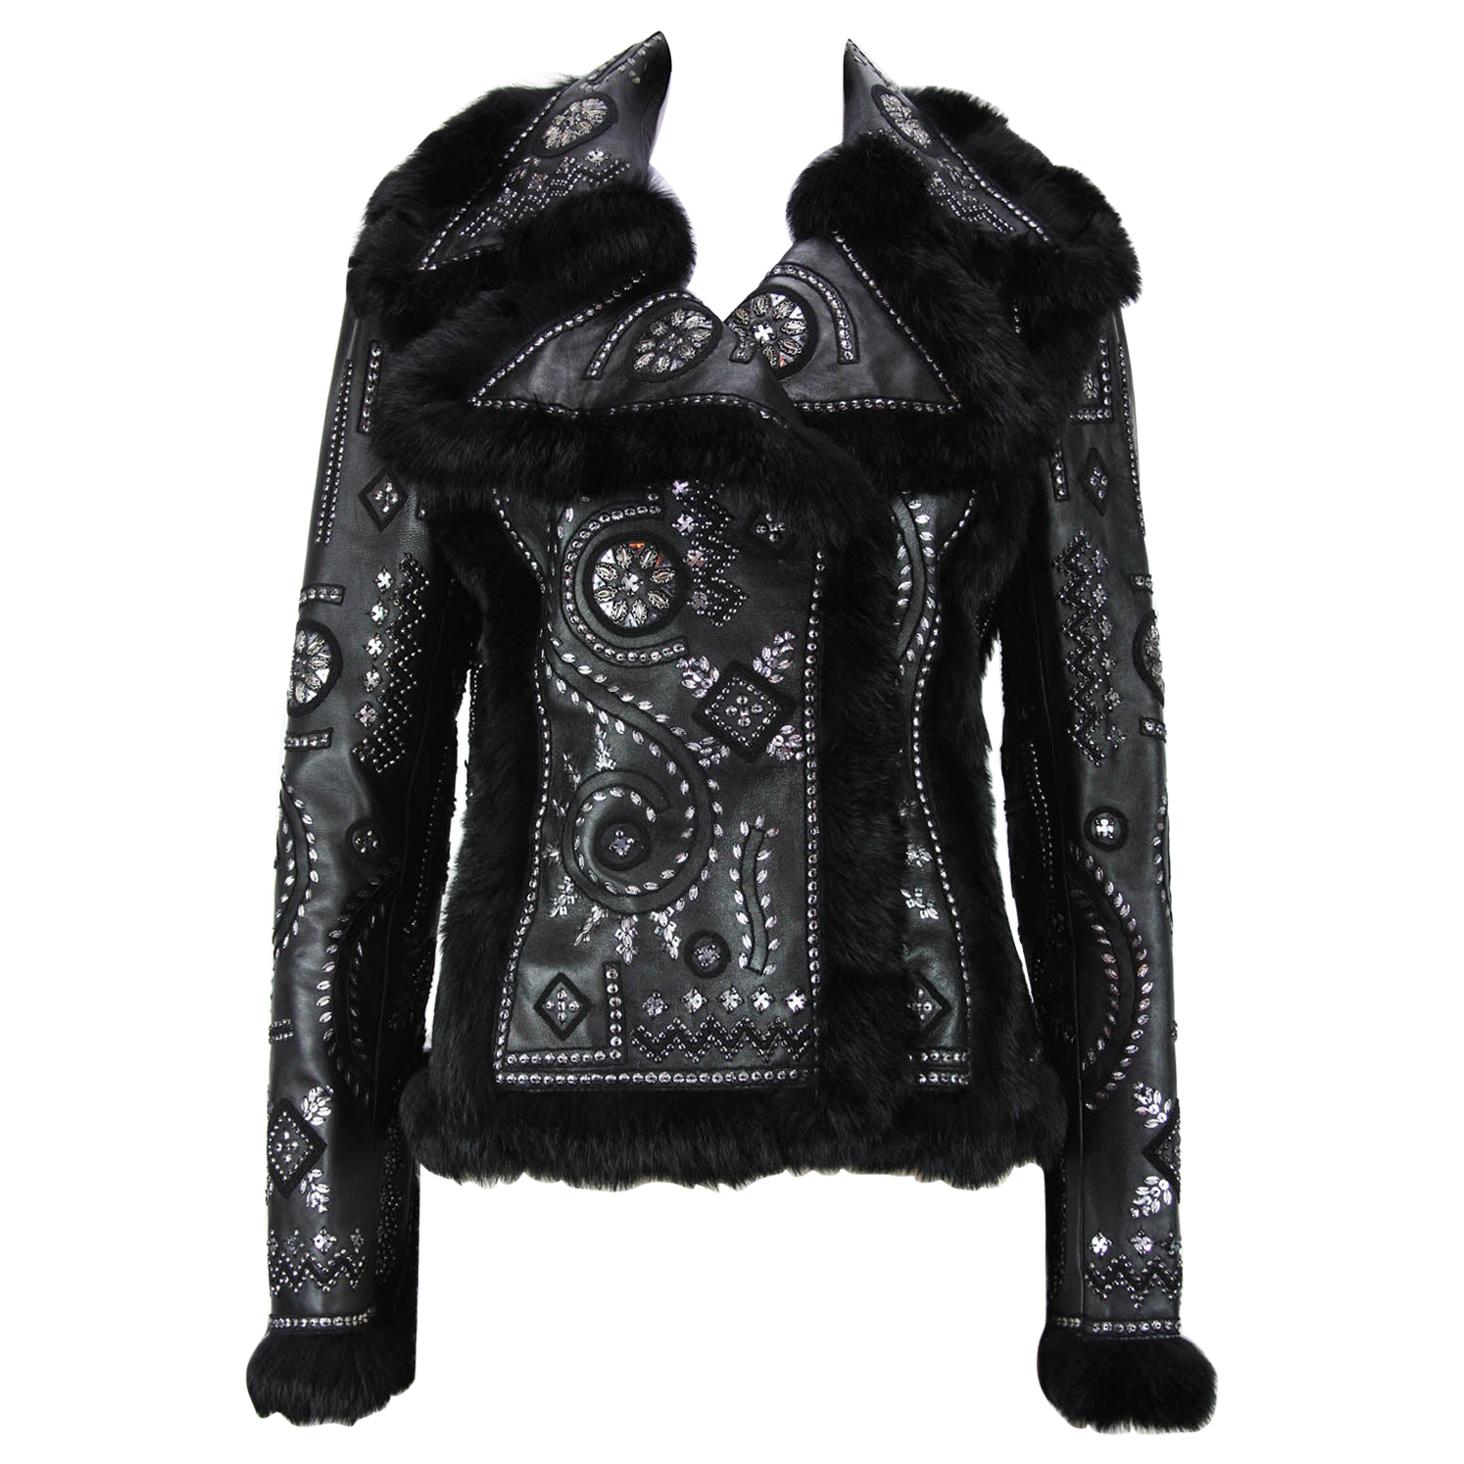 OSCAR DE LA RENTA Embellished Leather Jacket with FOX FUR US 6